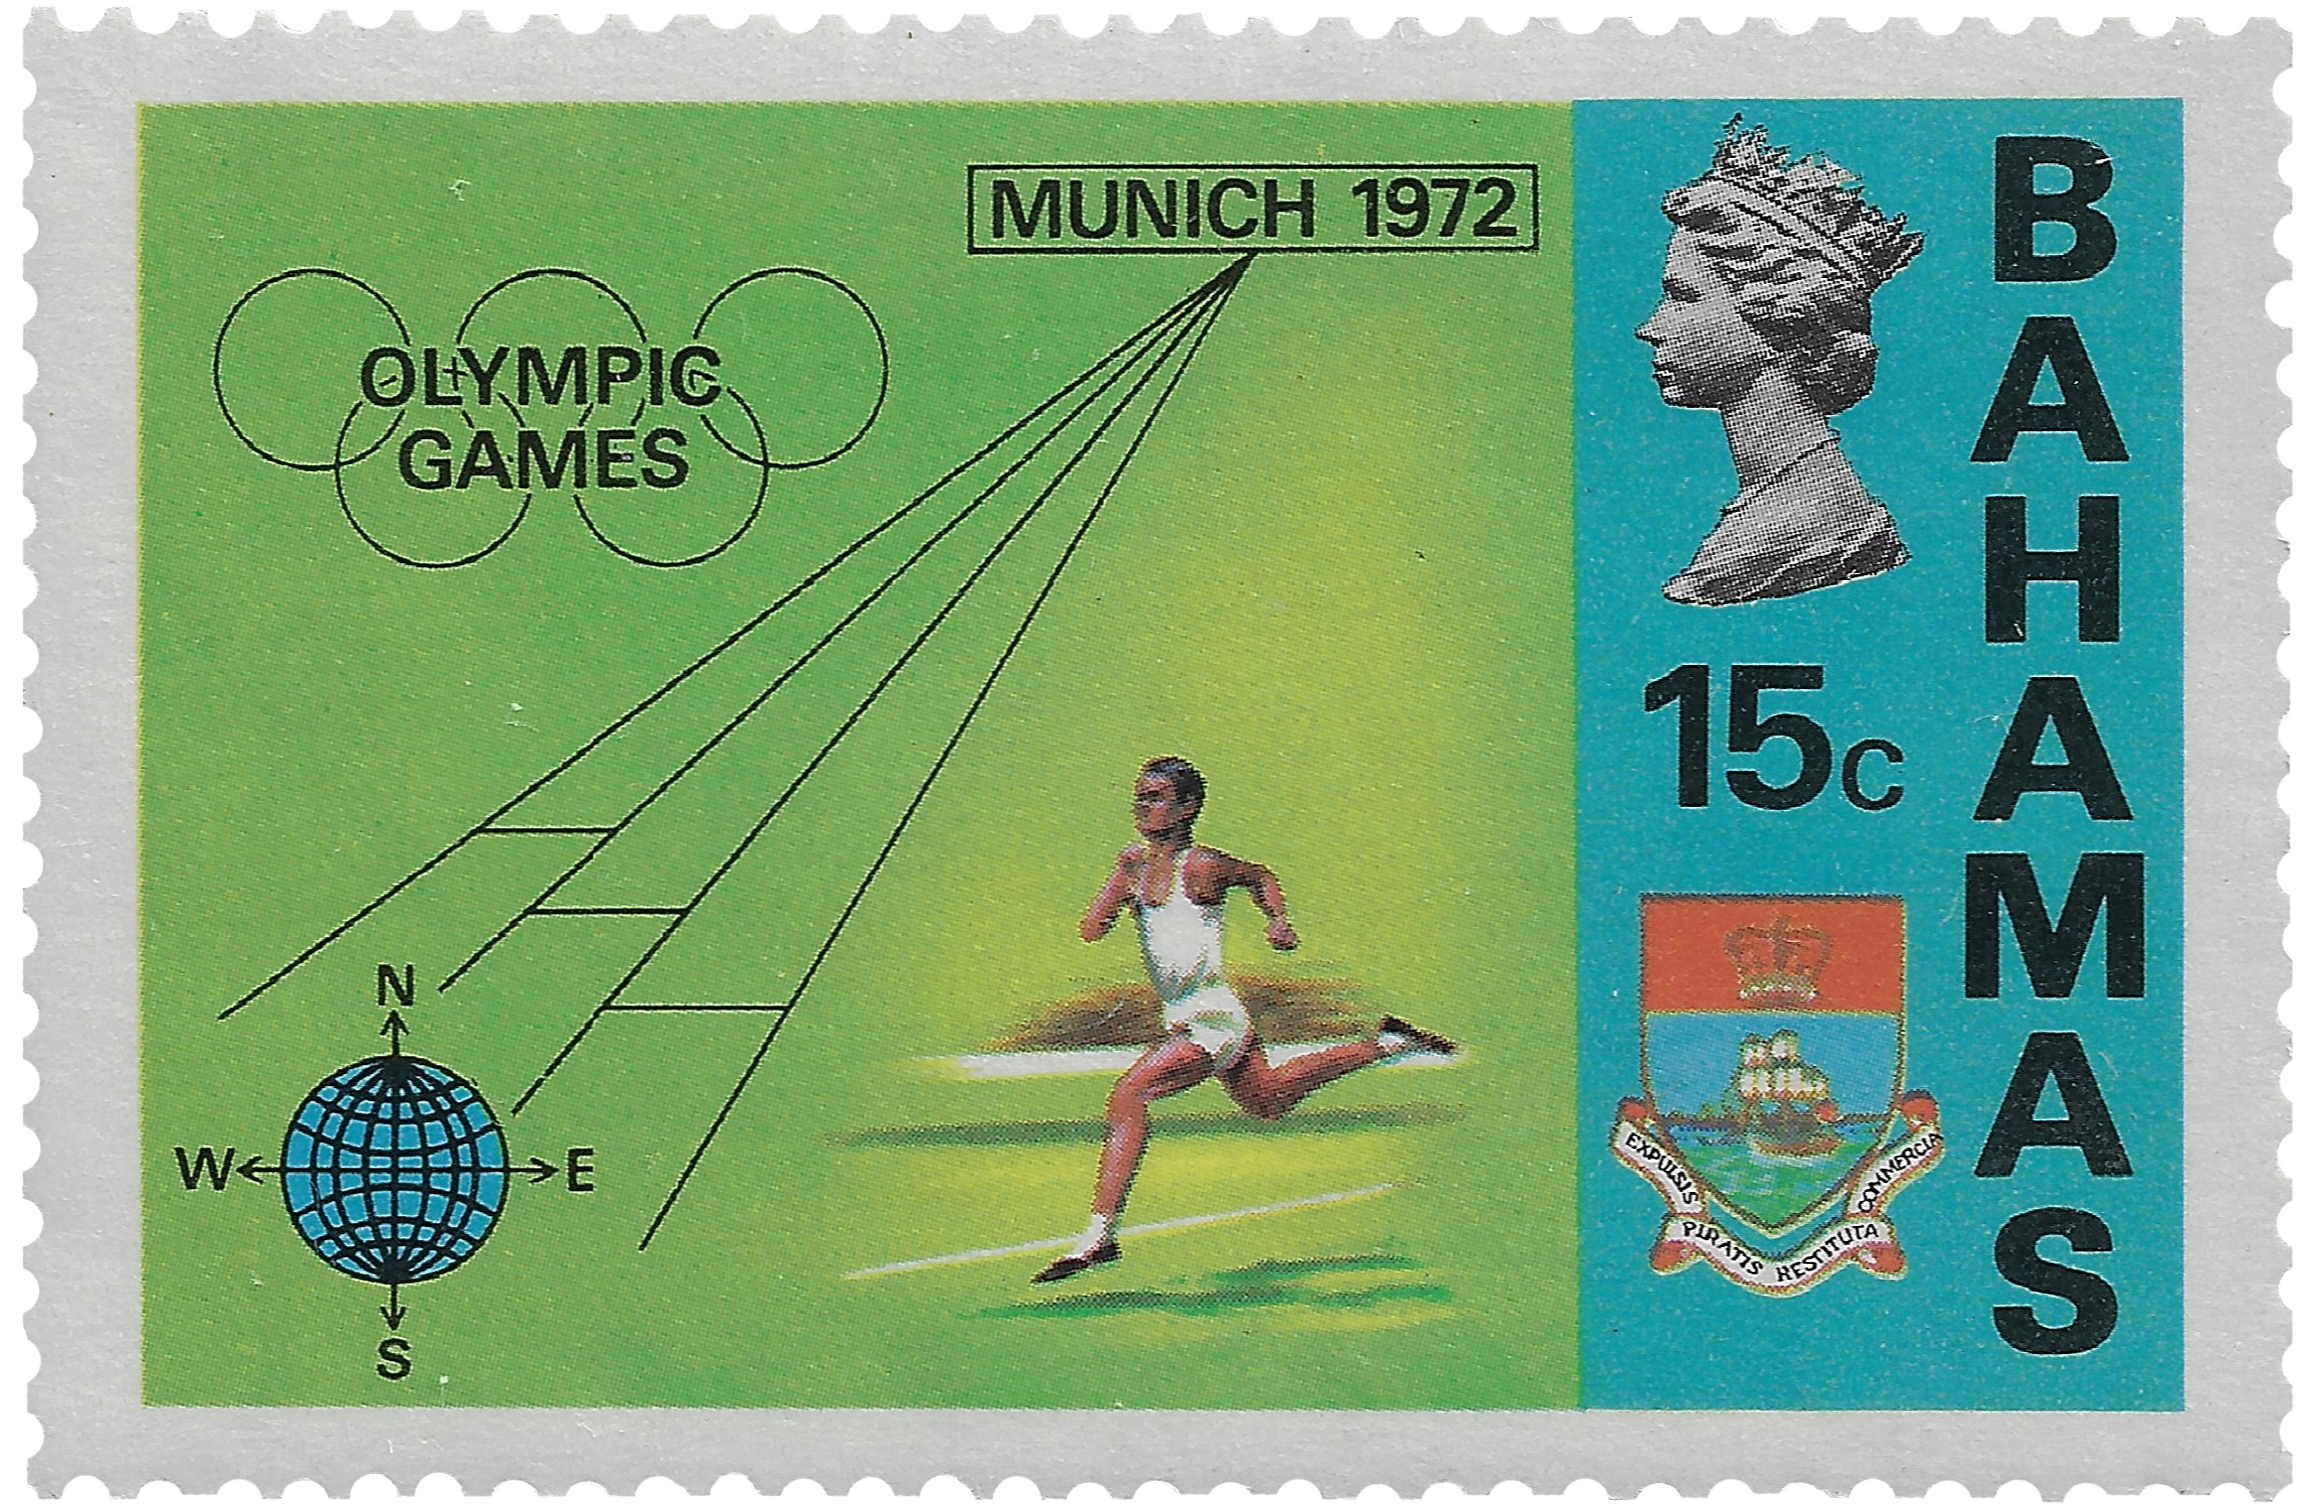 15c 1972, Olympic Games, Munich